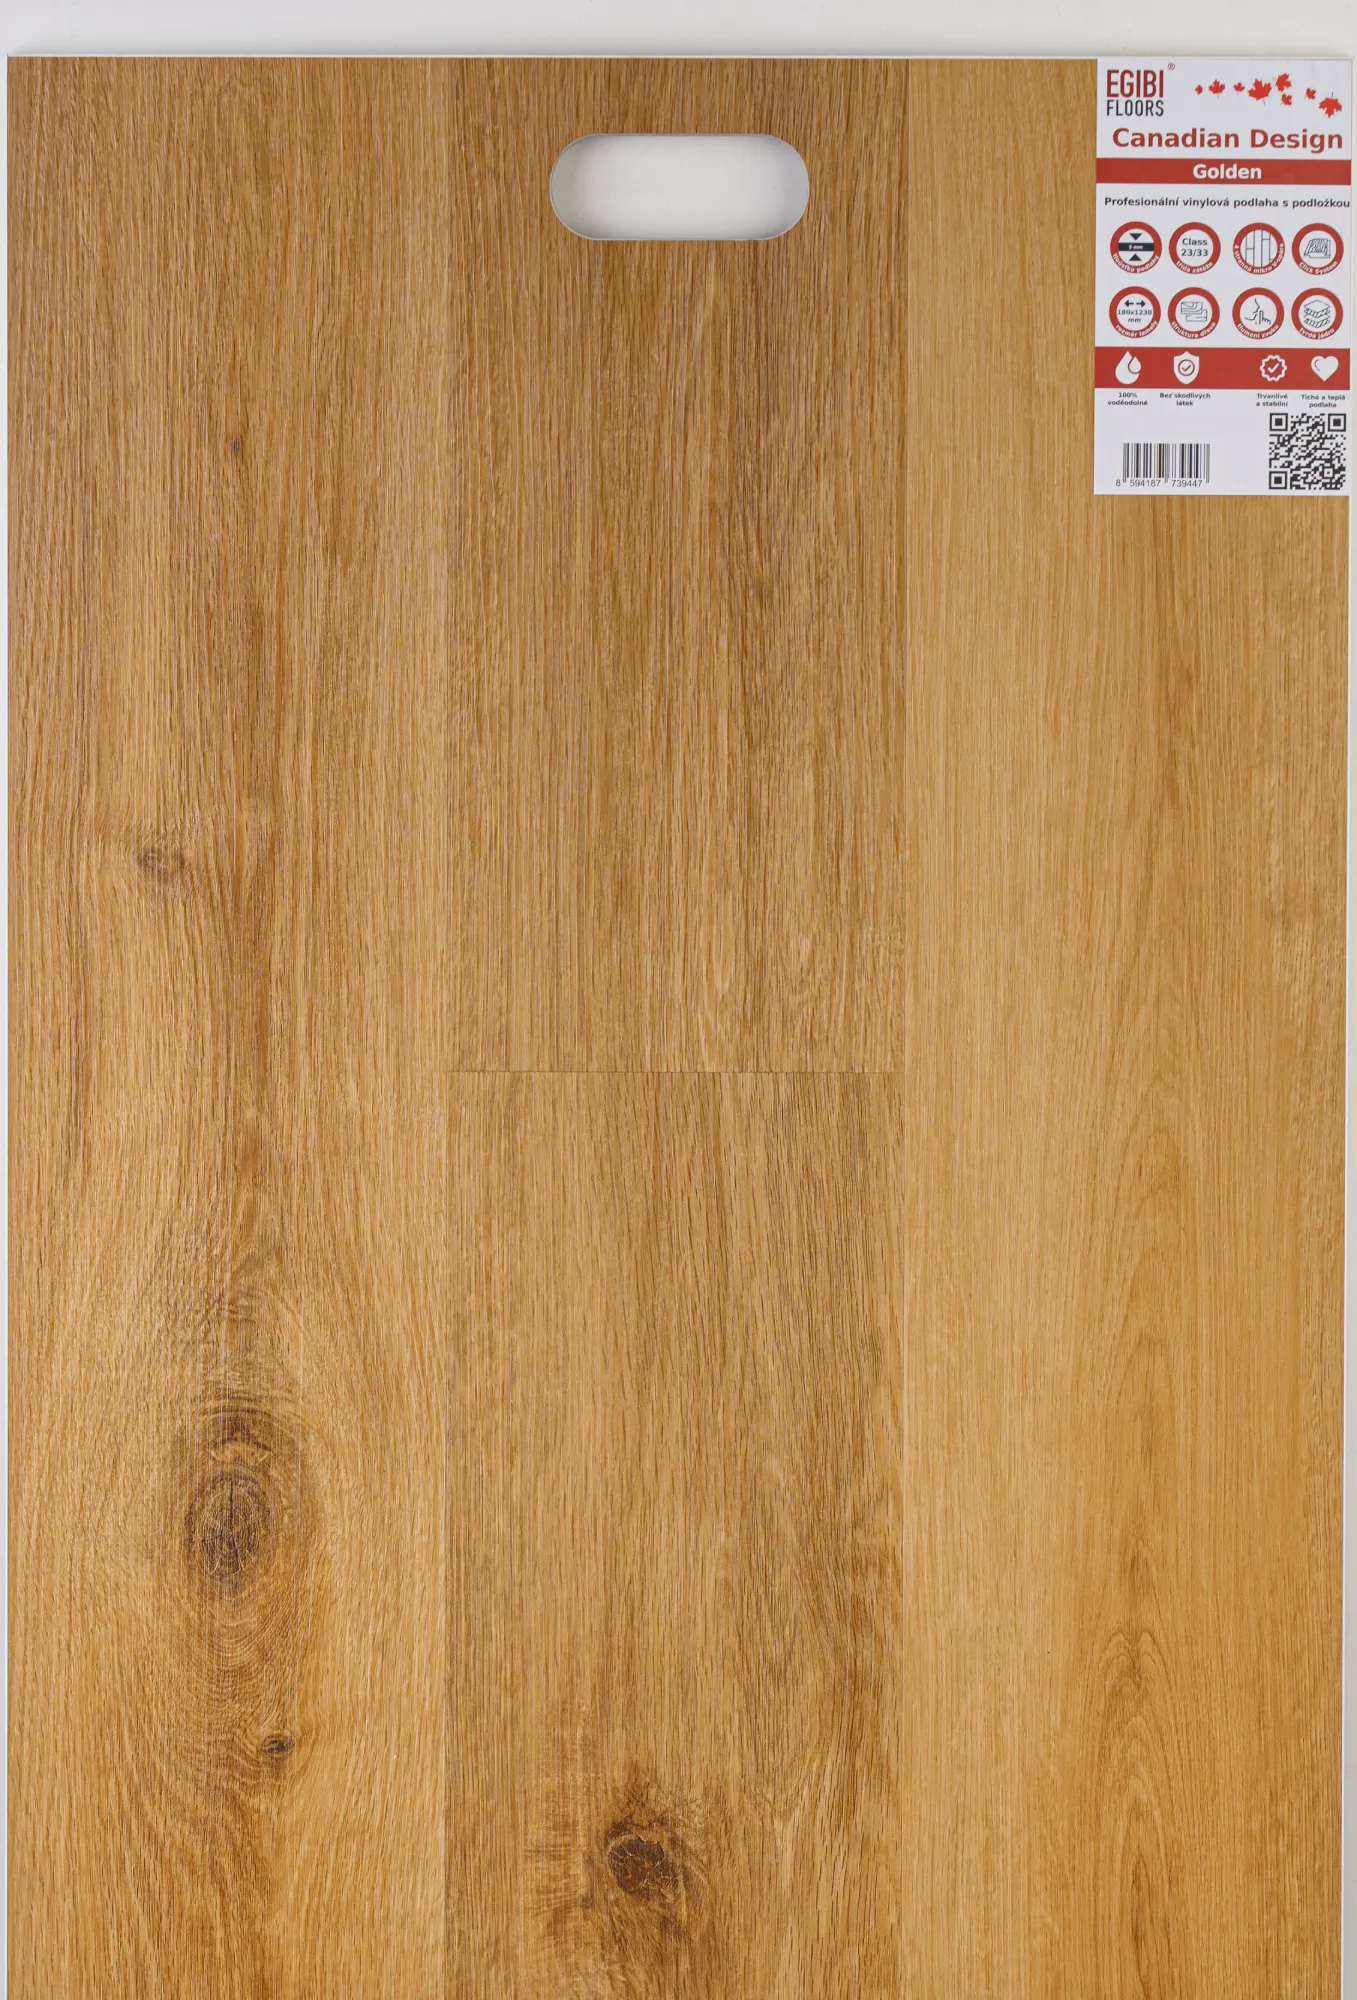 Canadian Design vinyl SPC RIGID podlaha 5/0,3 mm s podložkou GOLDEN 123x18 cm (1,77 m2)